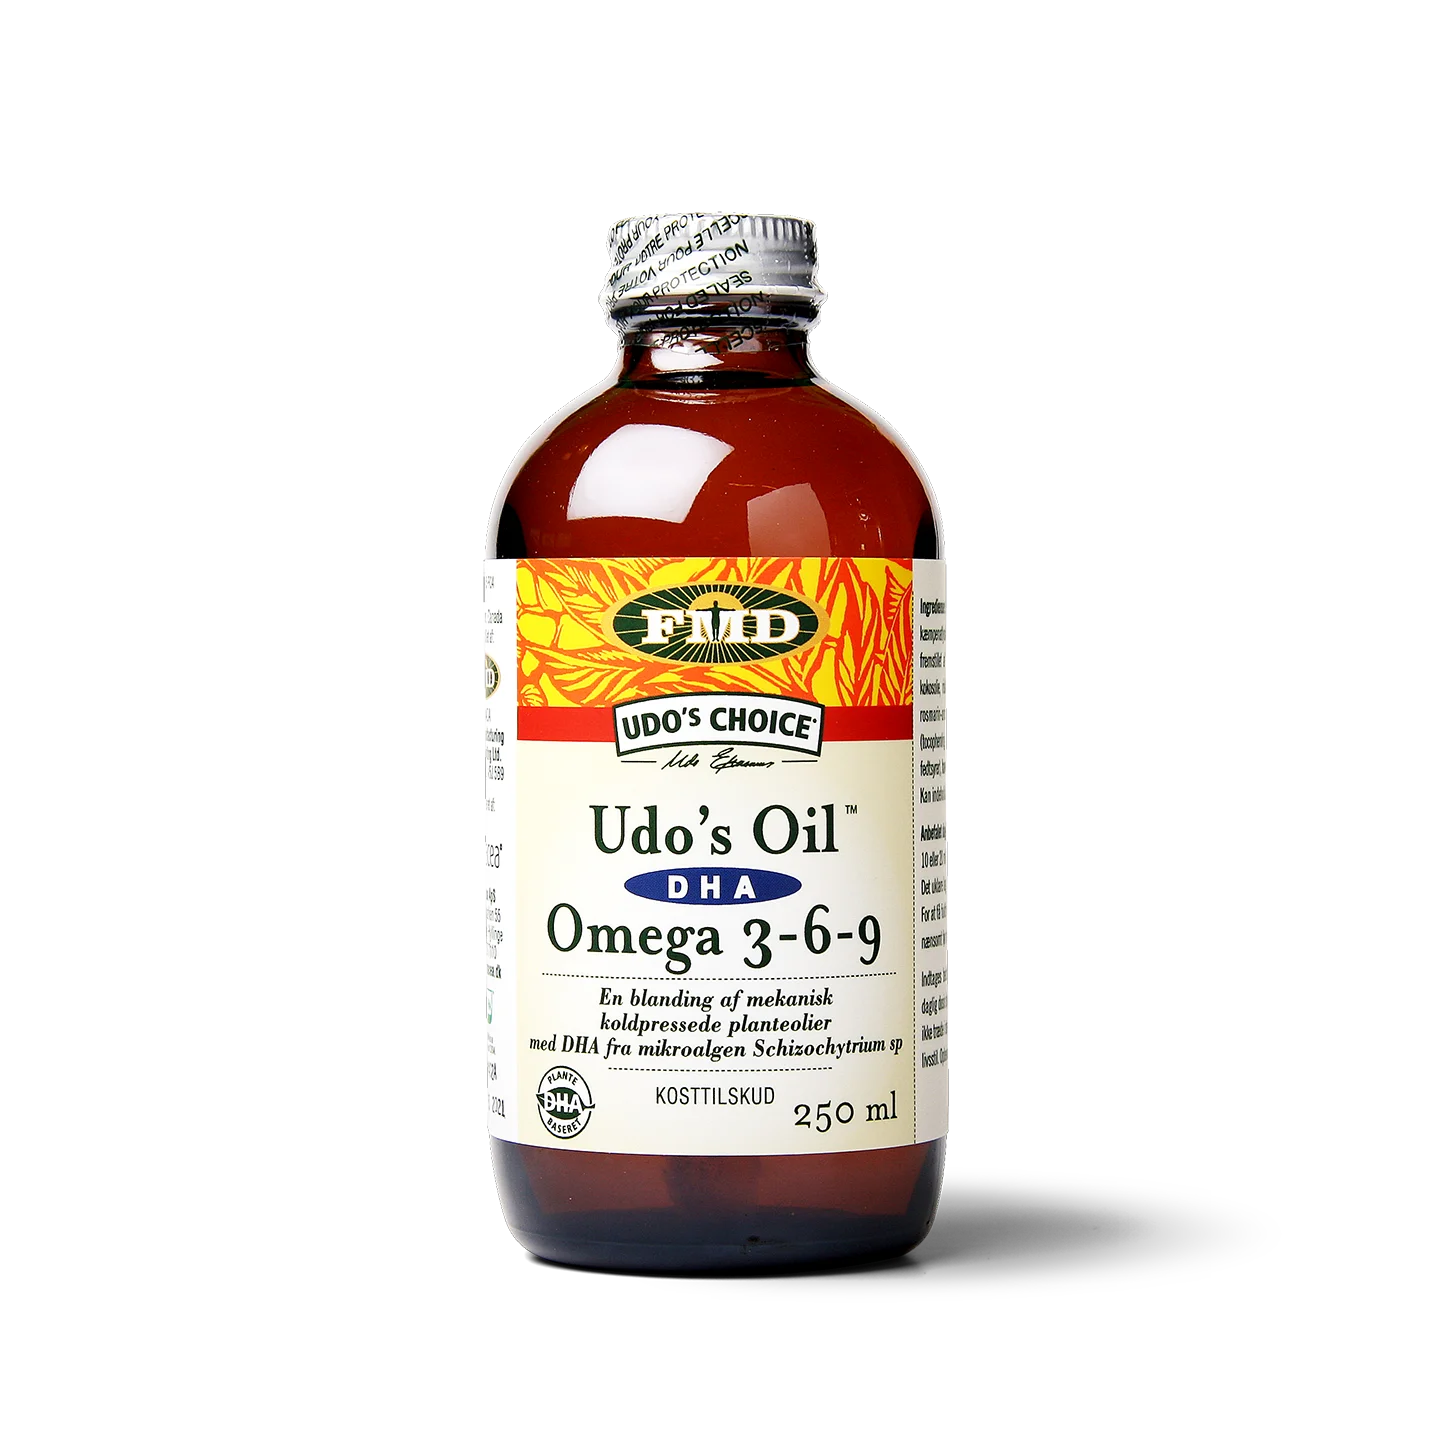 Udo's Oil (Omega 3-6-9) DHA Blend